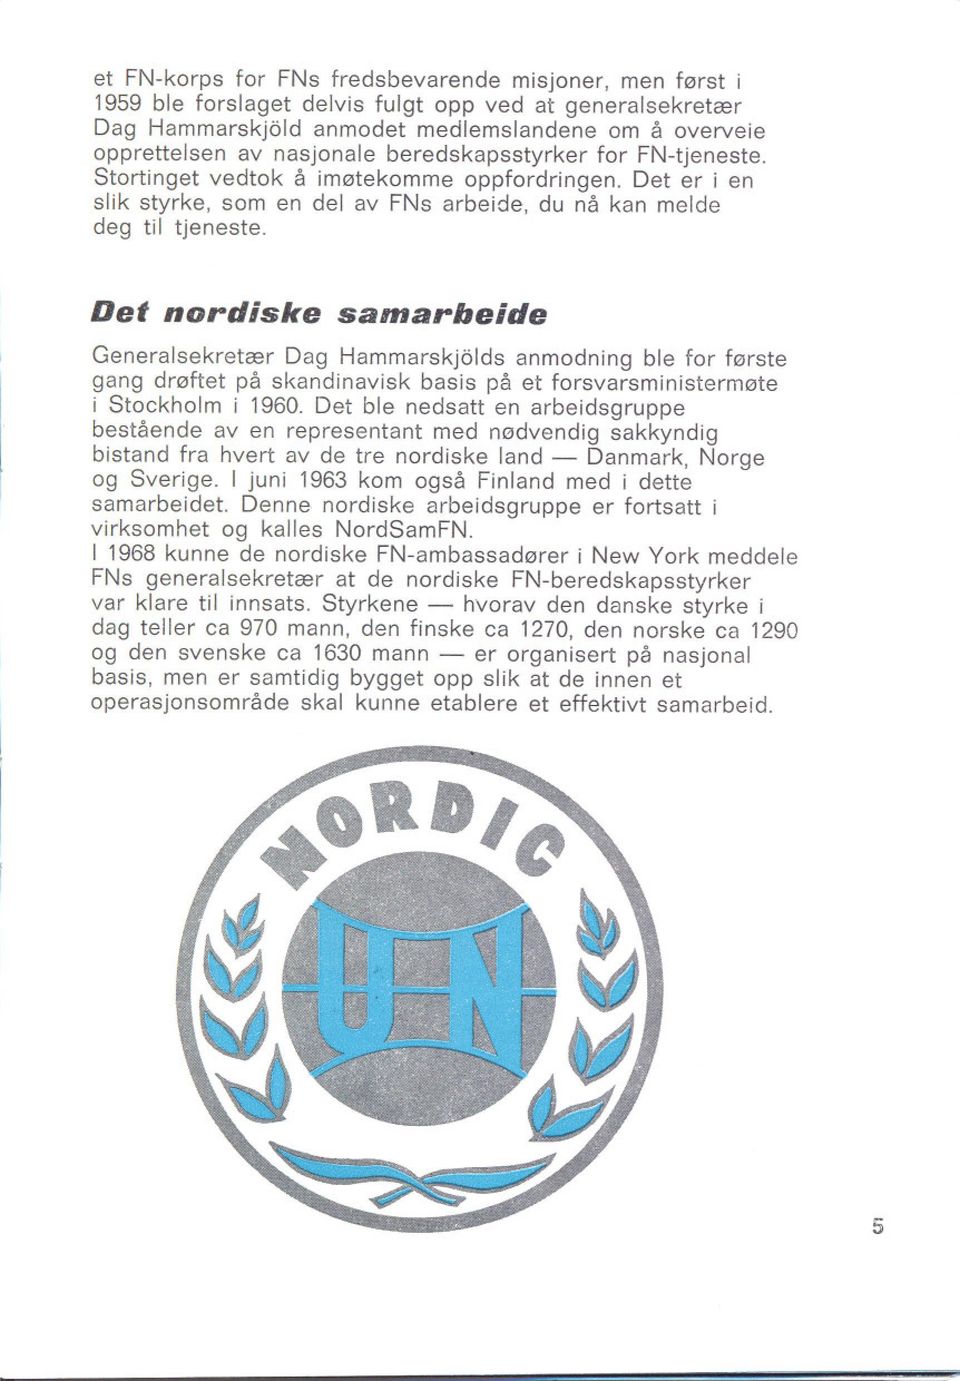 Del nordiske samarbeide Generalsekretcer Dag Hammarskjblds anmodning ble for f0rste gang dmftet pa skandinavisk basis pa et forsvarsministerm0te i Stockholm i 1960.